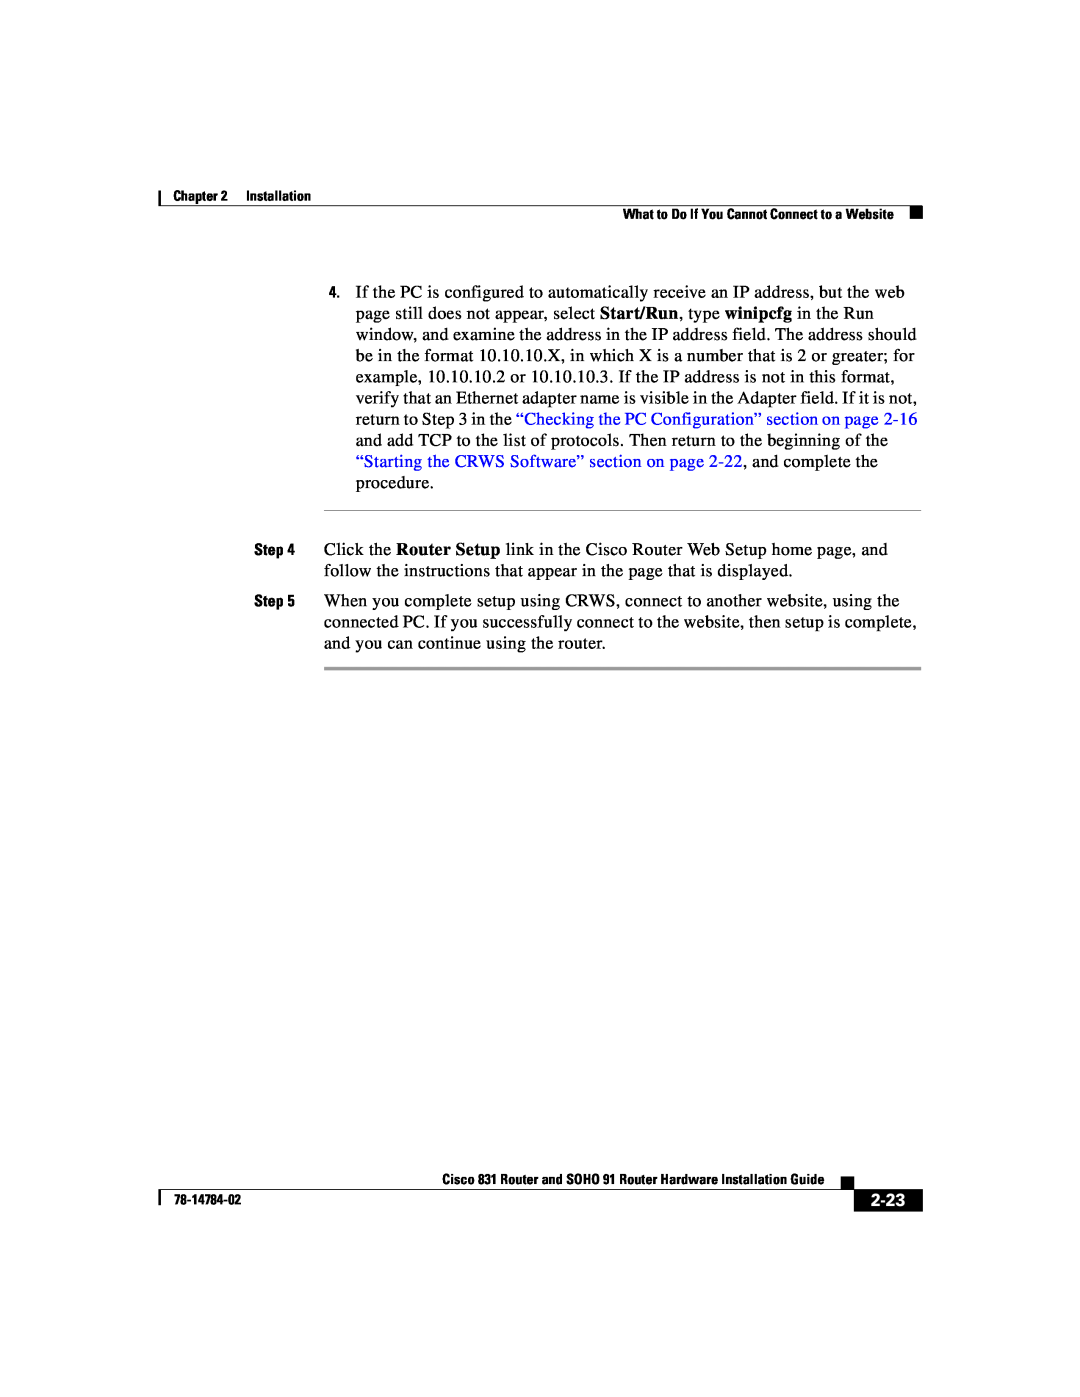 Cisco Systems 78-14784-02 manual 2-23 